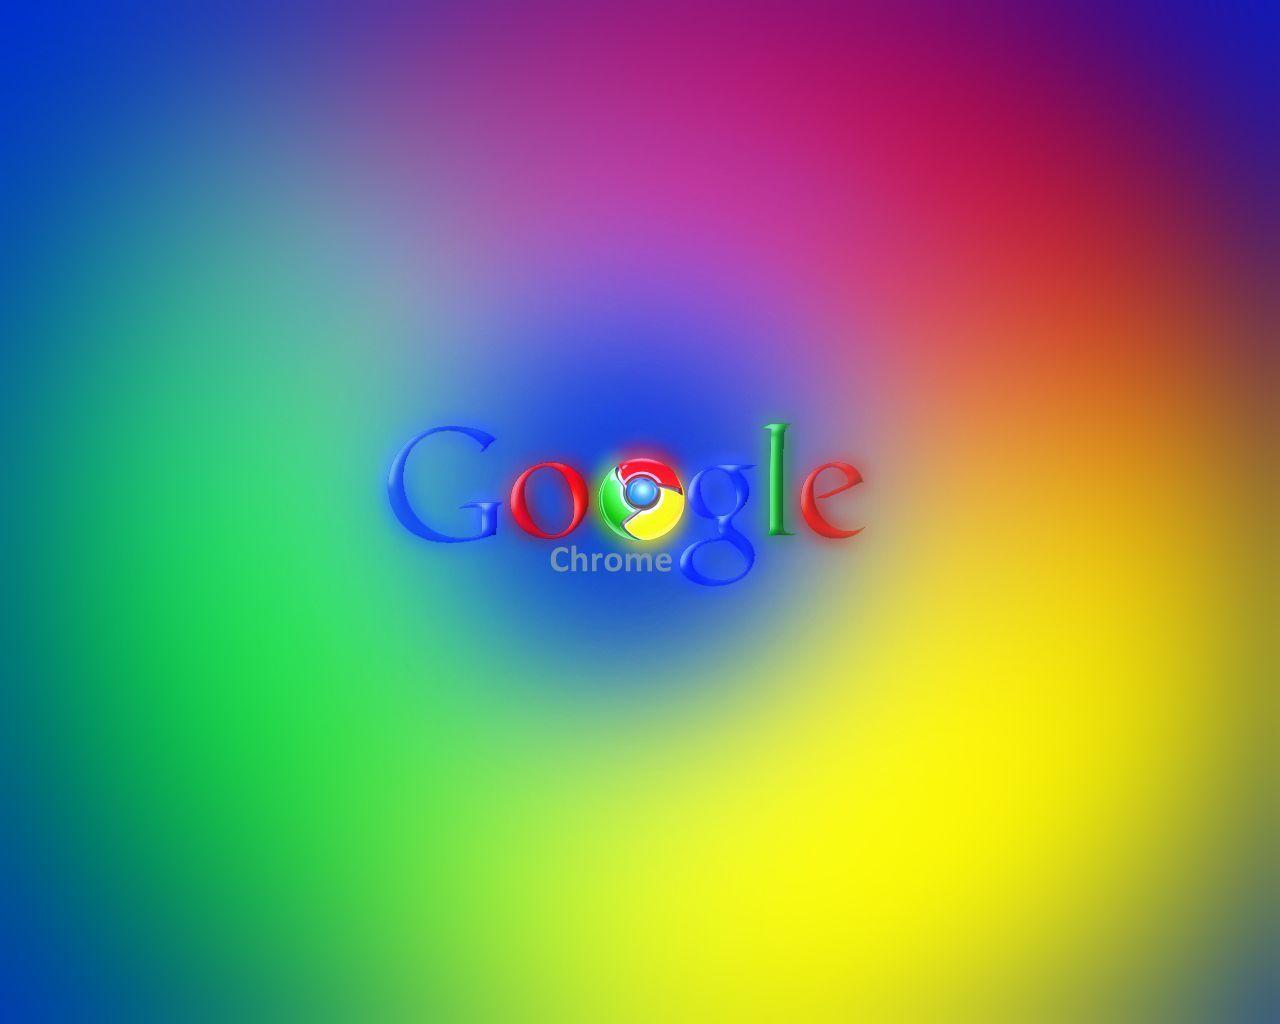 Awesome Google Chrome Wallpaper